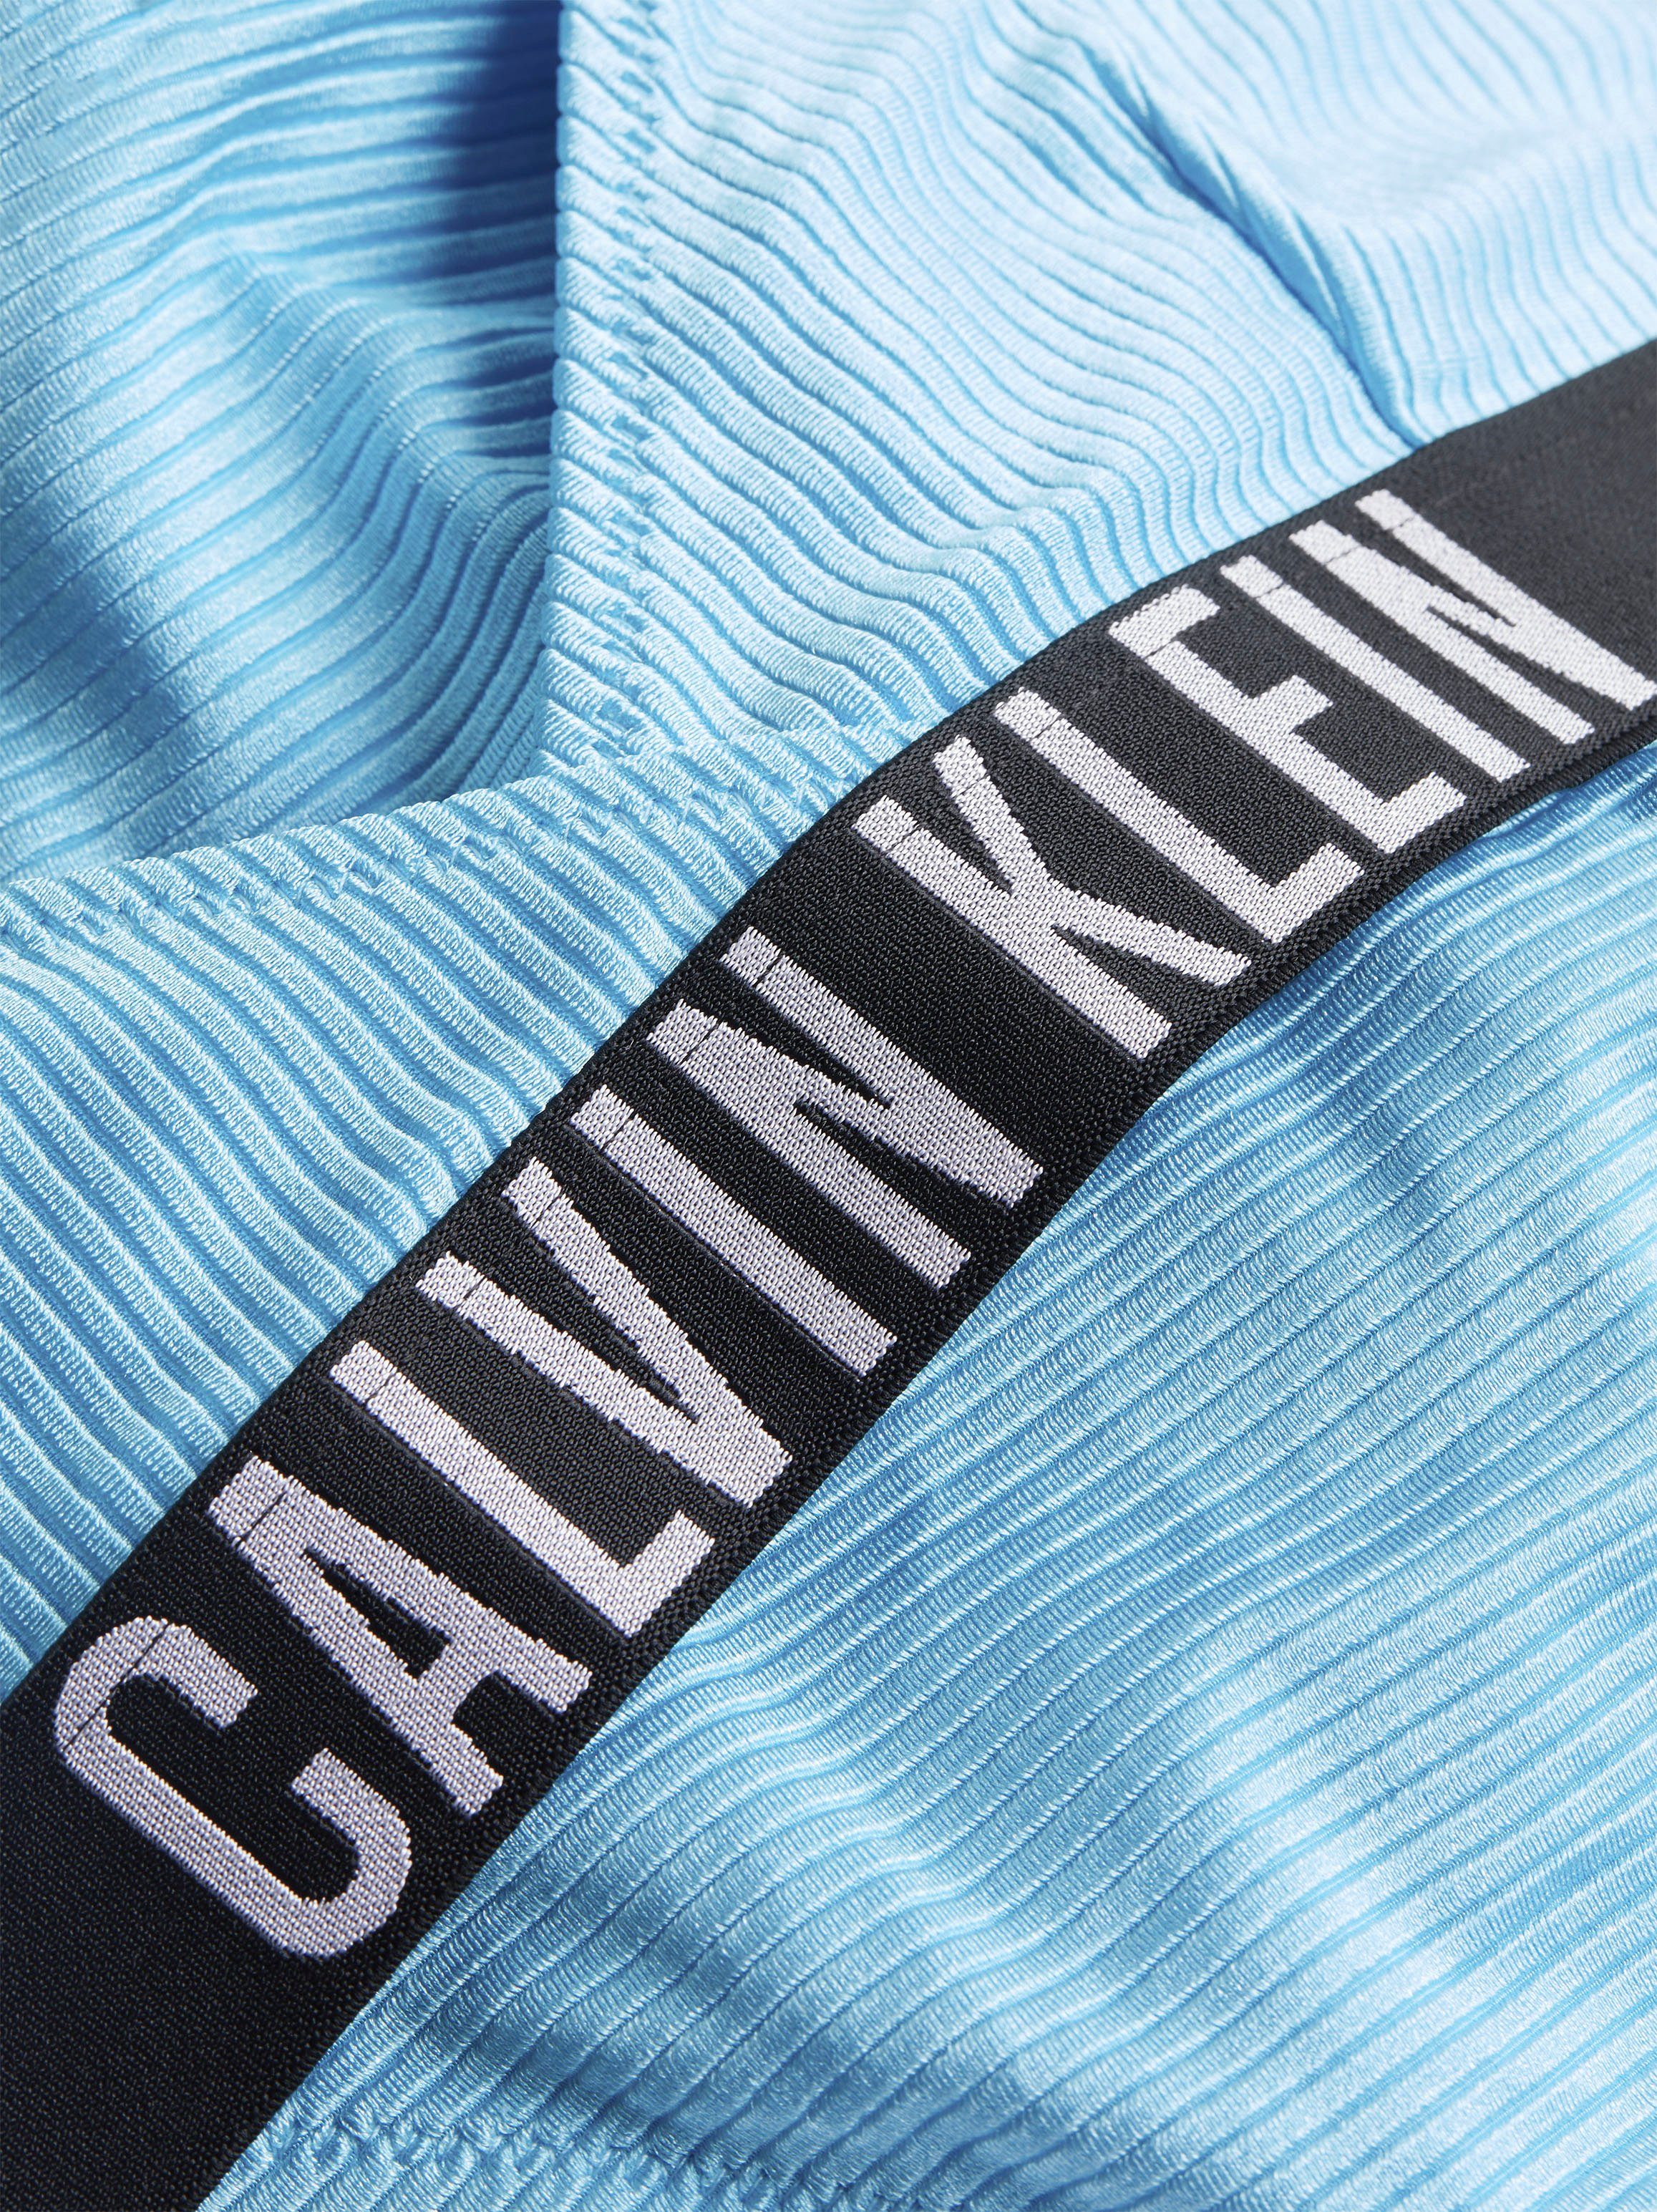 Calvin Klein Swimwear BIKINI (2-St) Triangel-Bikini SET Markenlabel TRIANGLE CROSSOVER mit Blue_Tide